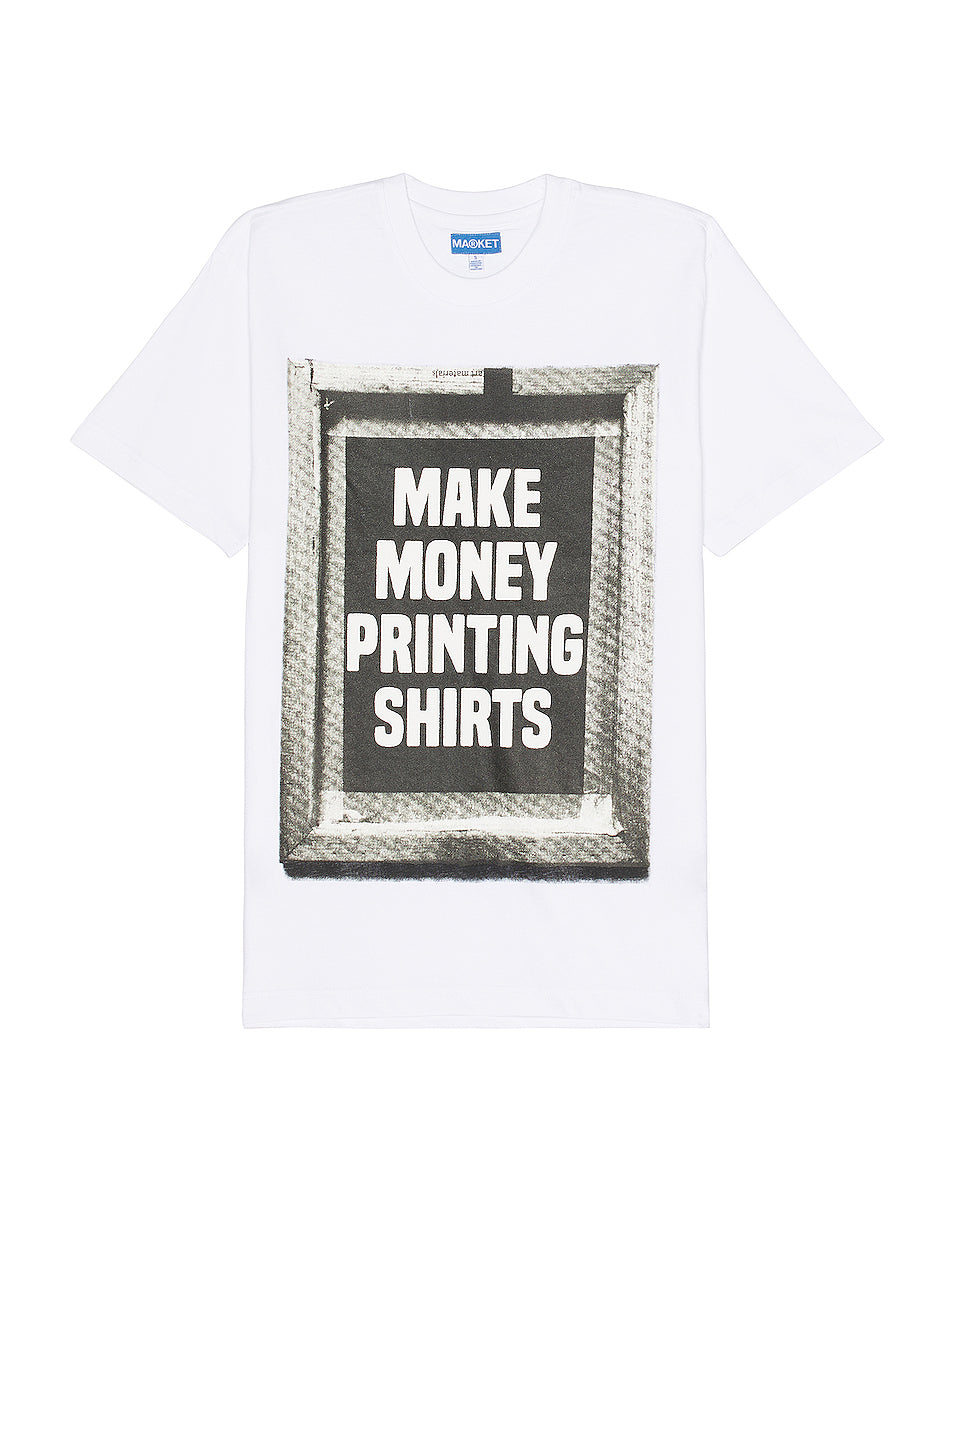 Printing Money T-shirt